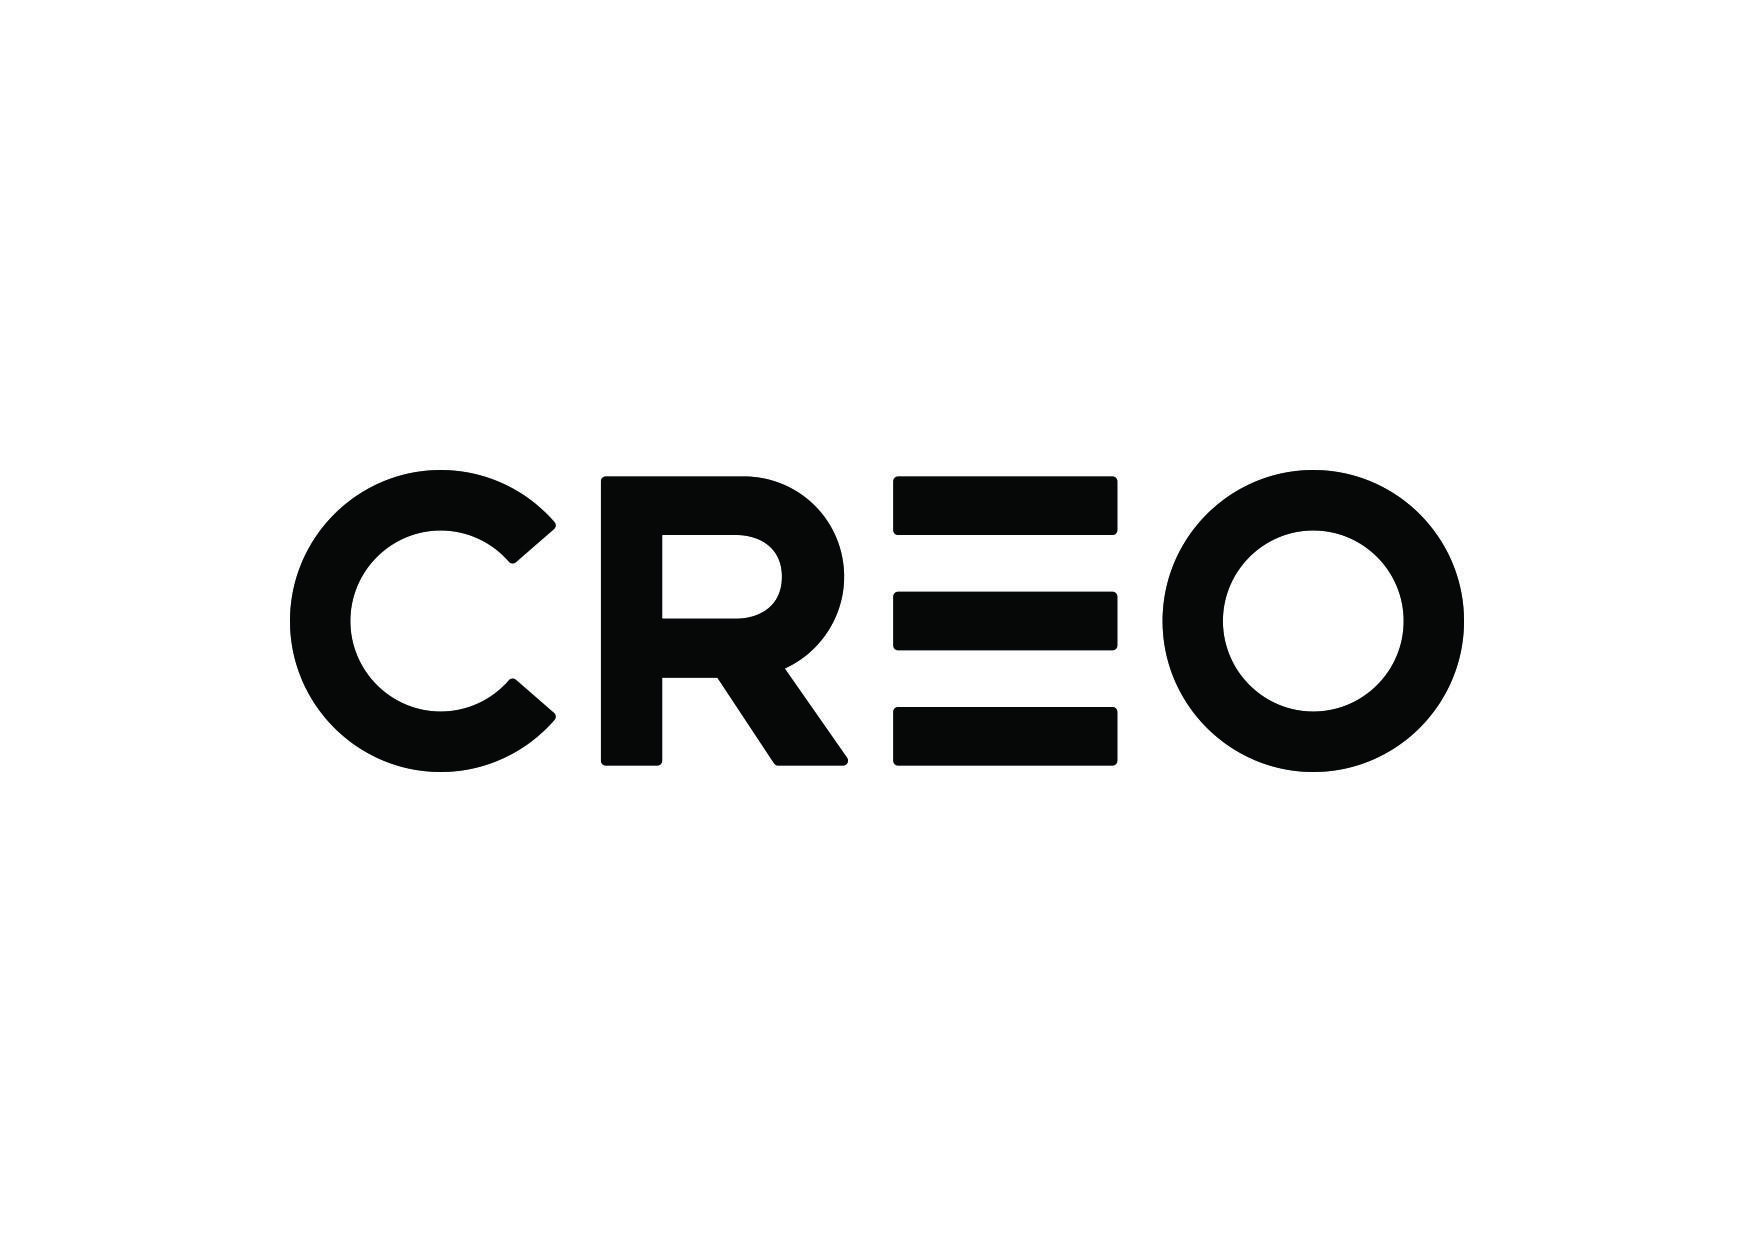 Creo Logo - Index of /wp-content/uploads/2016/10